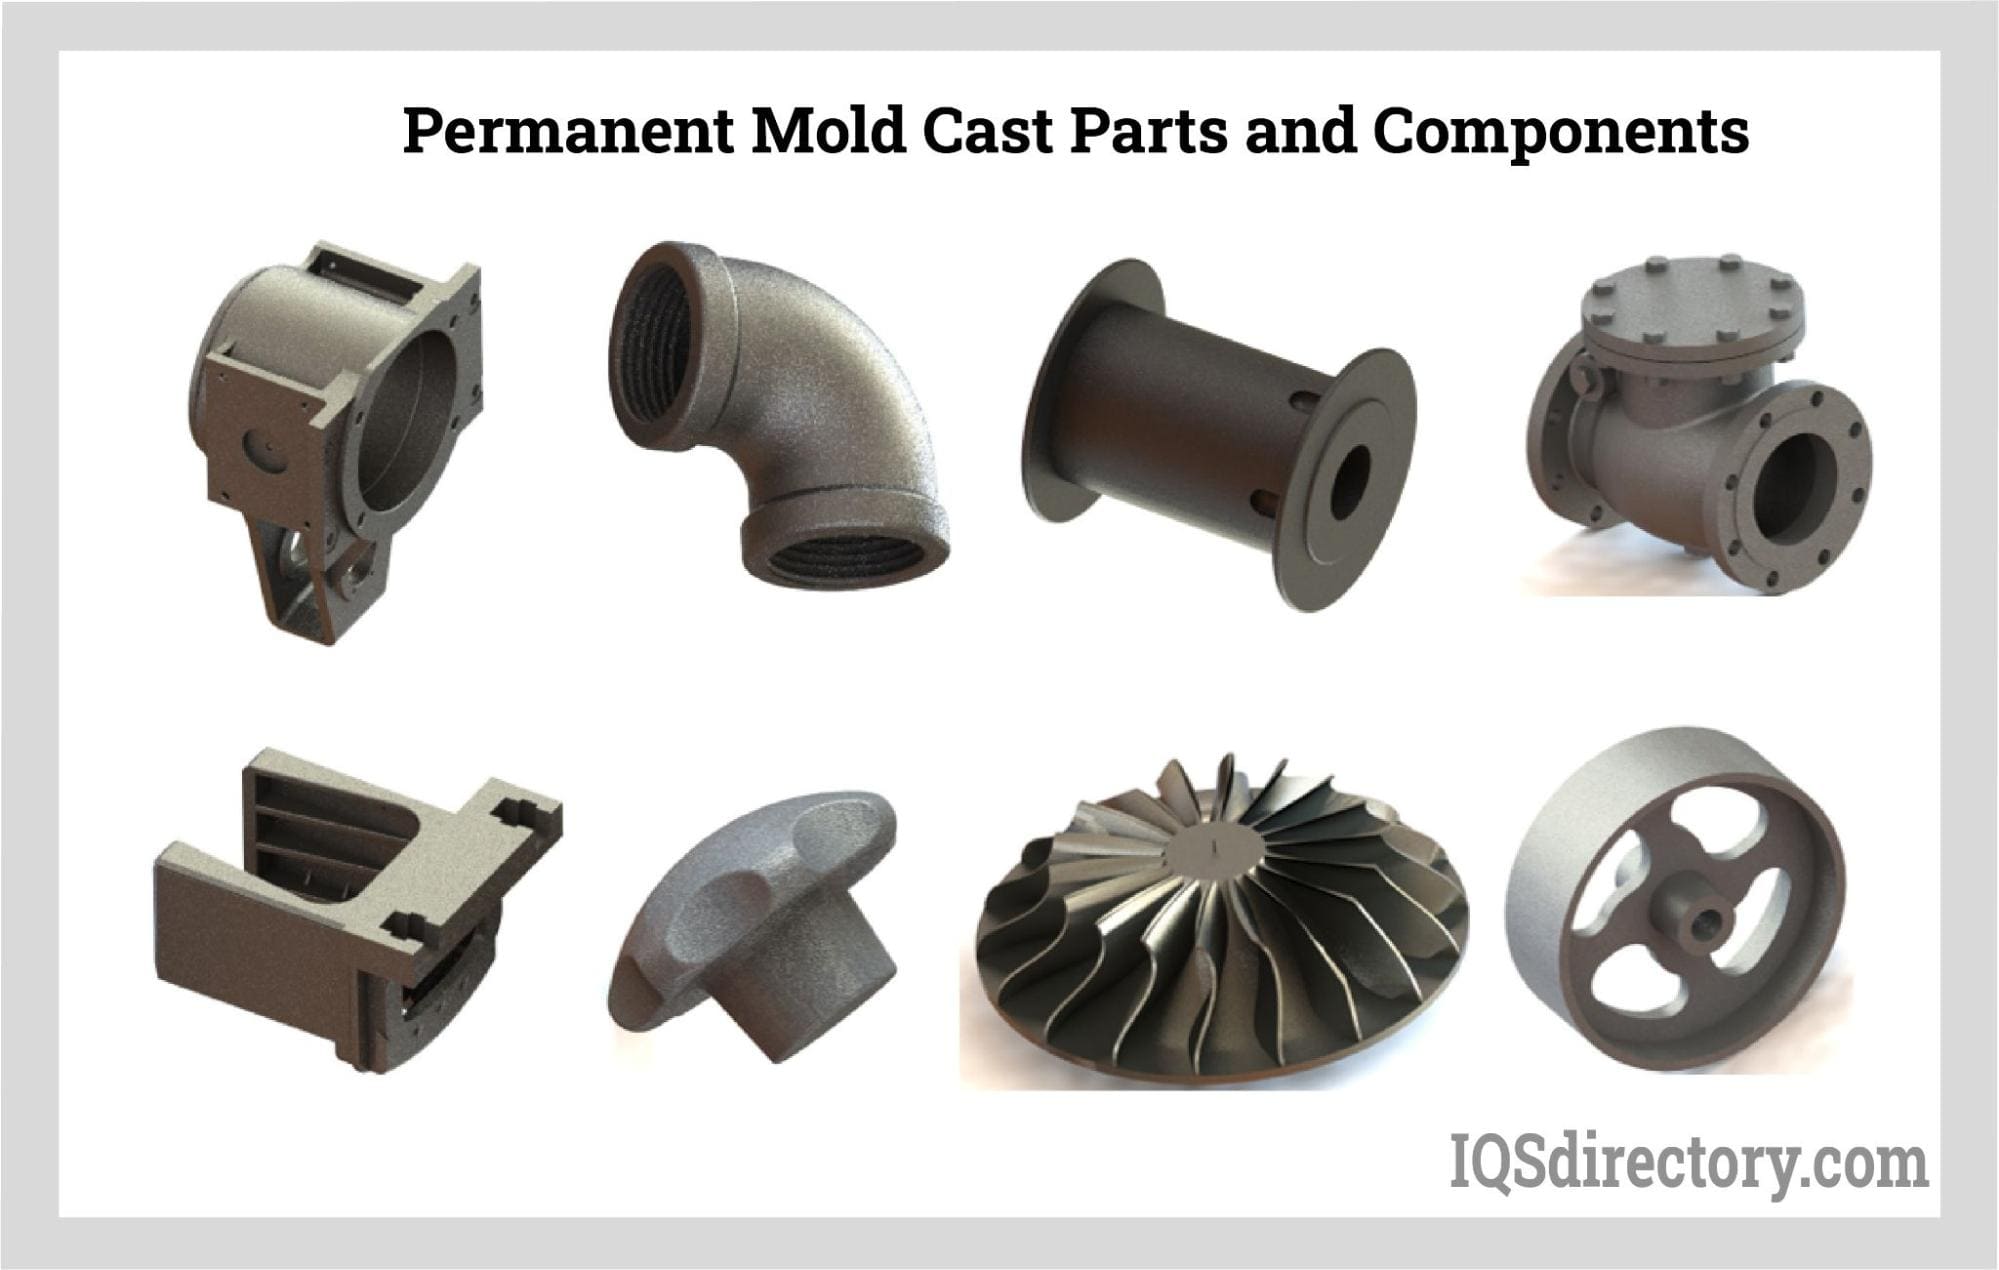 Permanent Mold Cast Parts and Components